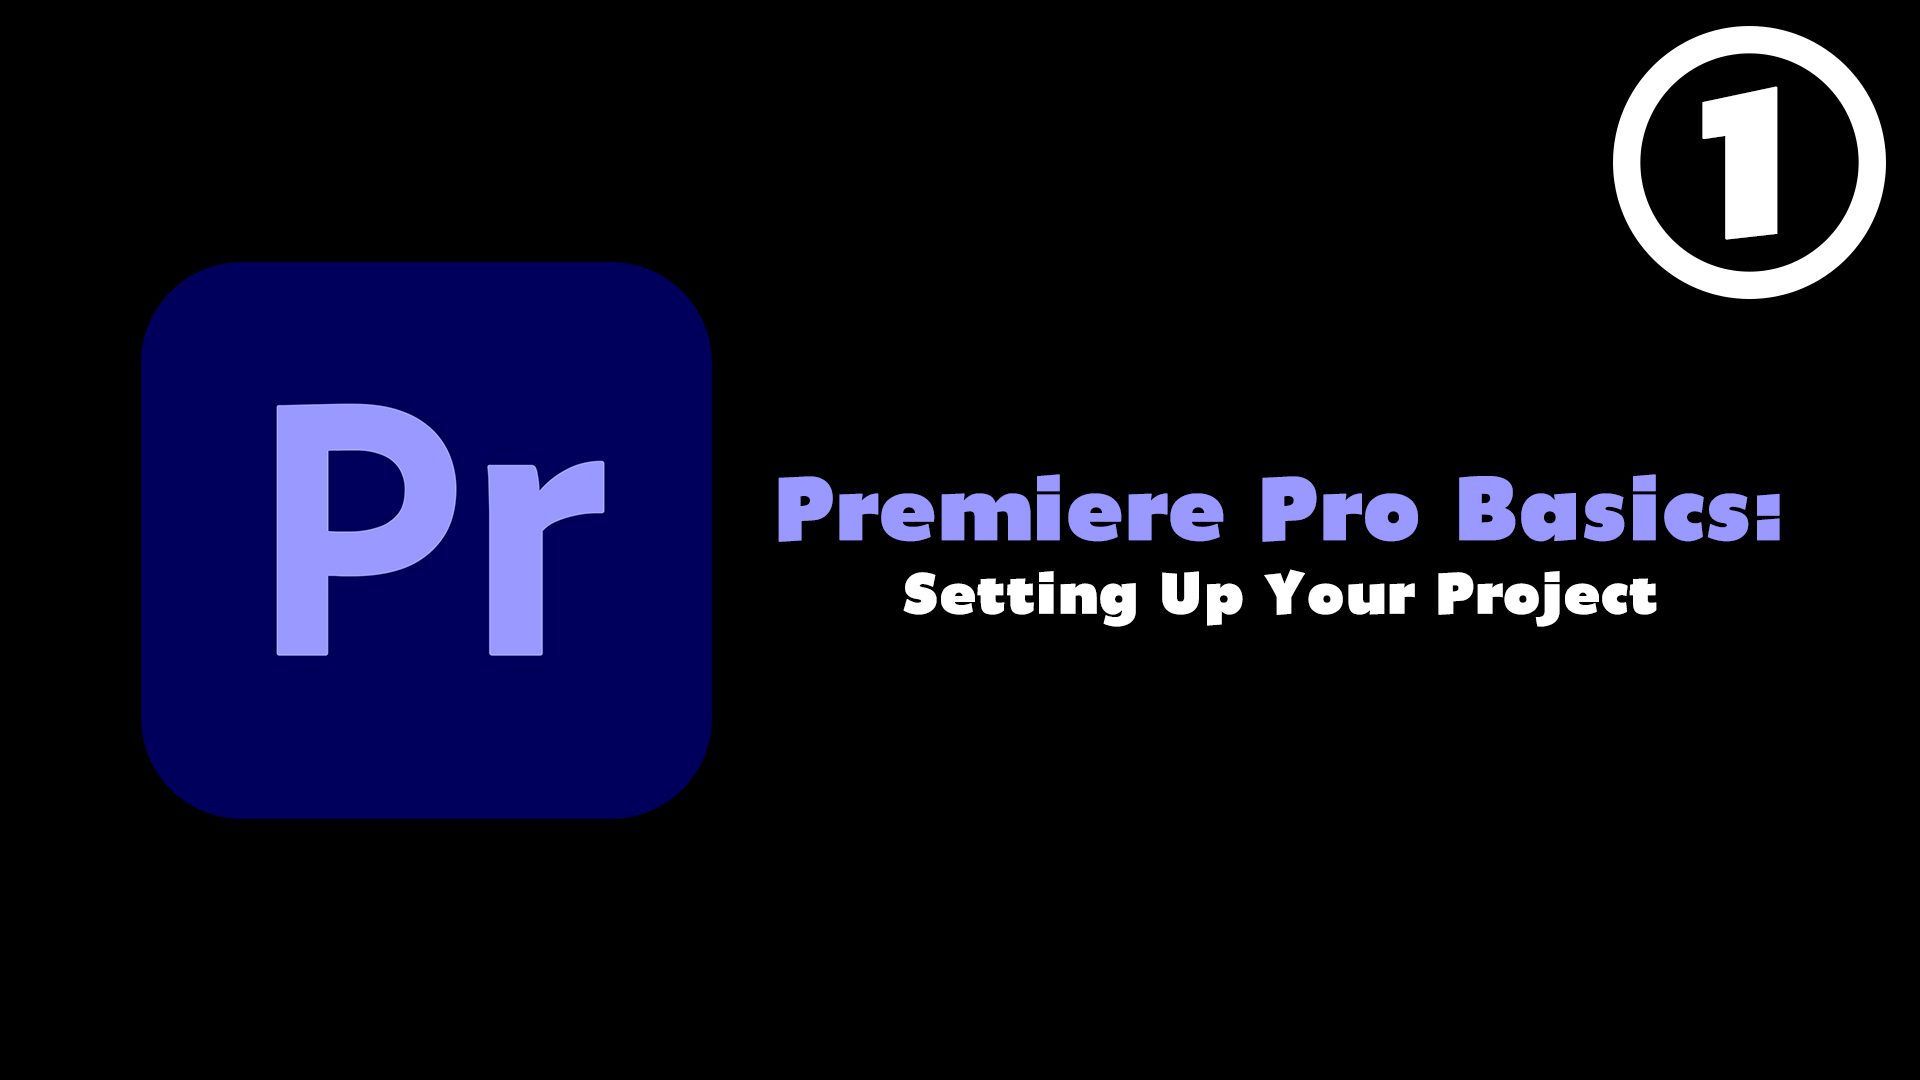 Premiere Pro Basics Course (Episode 1) - Setting Up Your Project